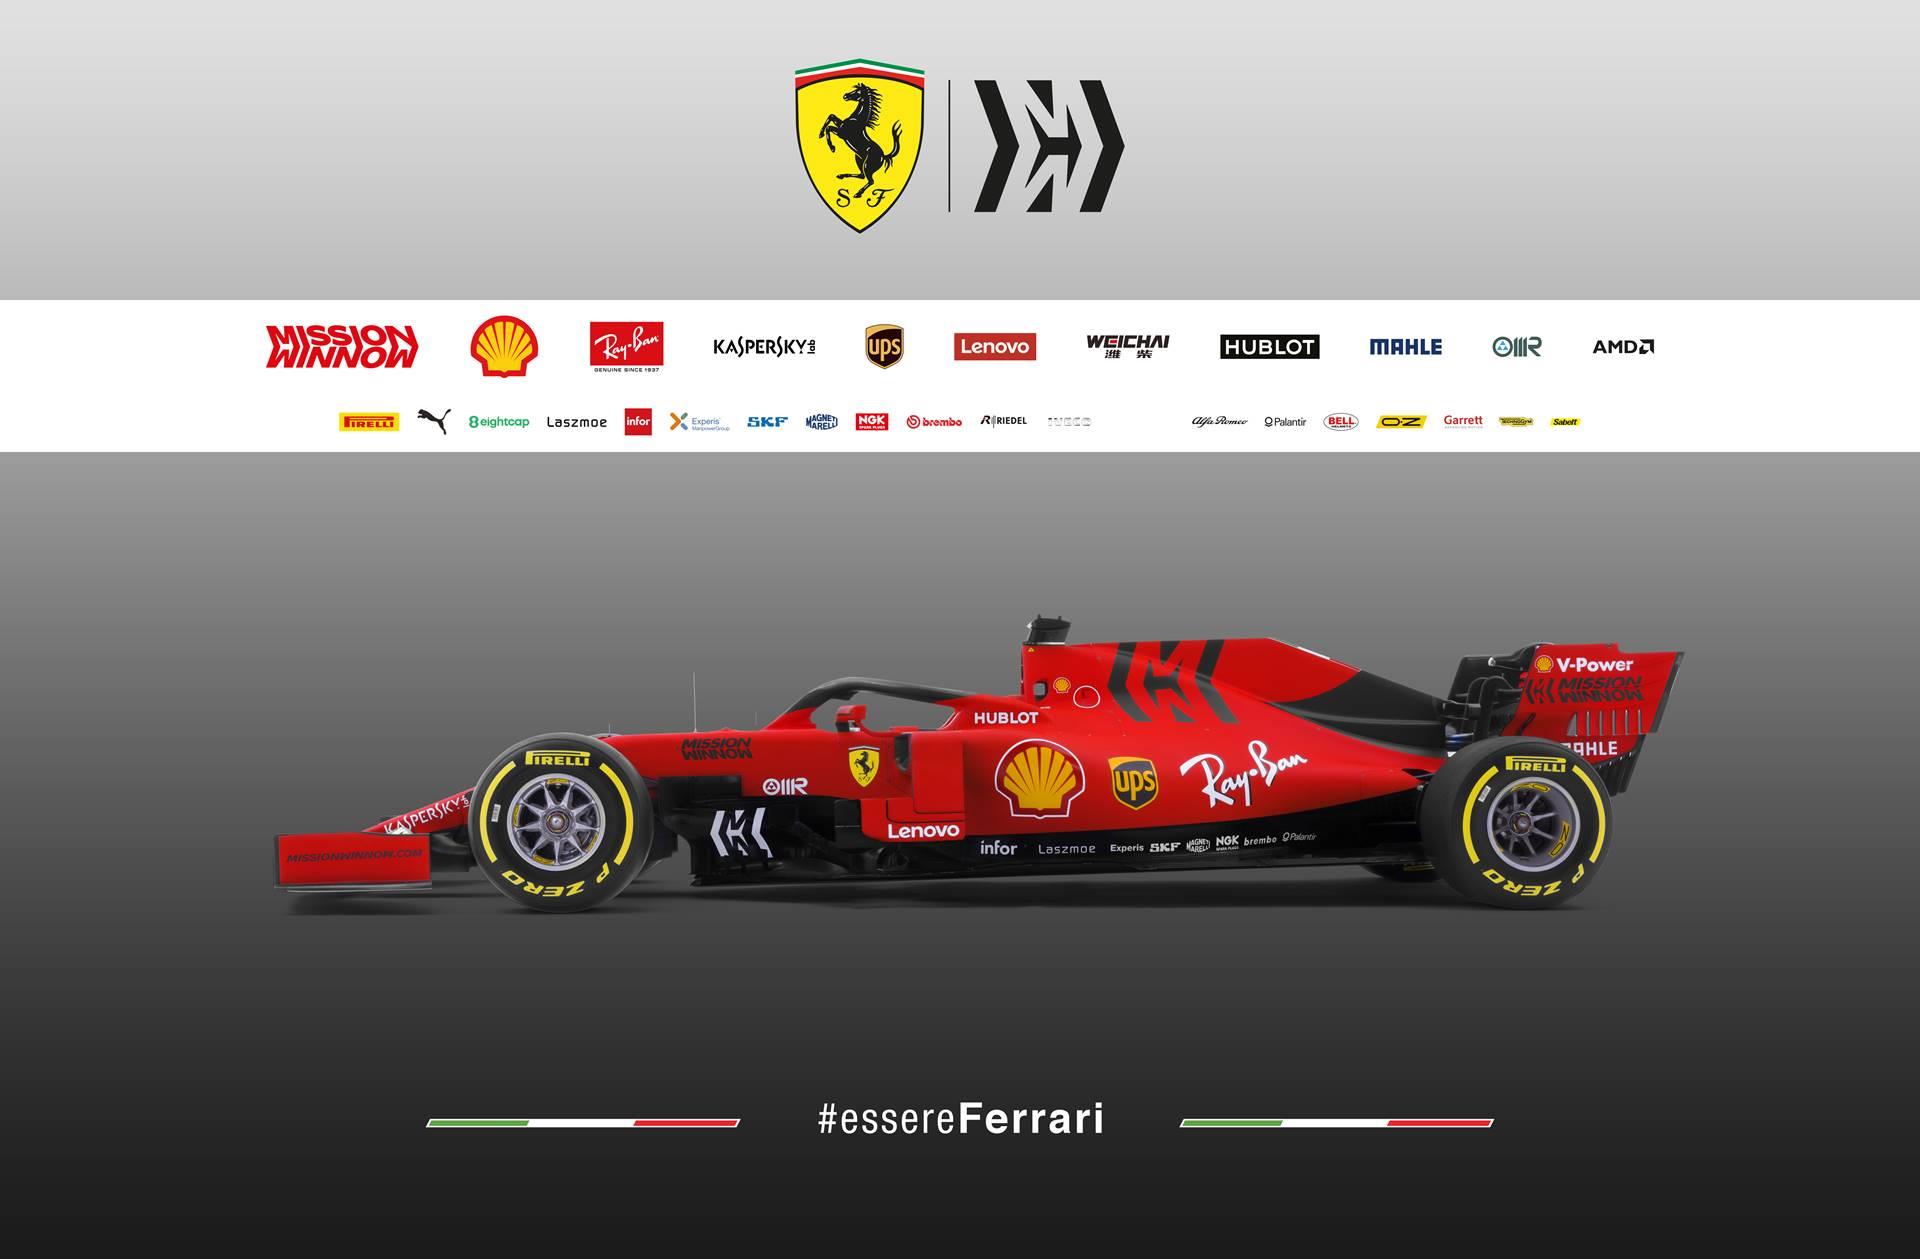 Ferrari Sf90 Wallpaper And Image Gallery